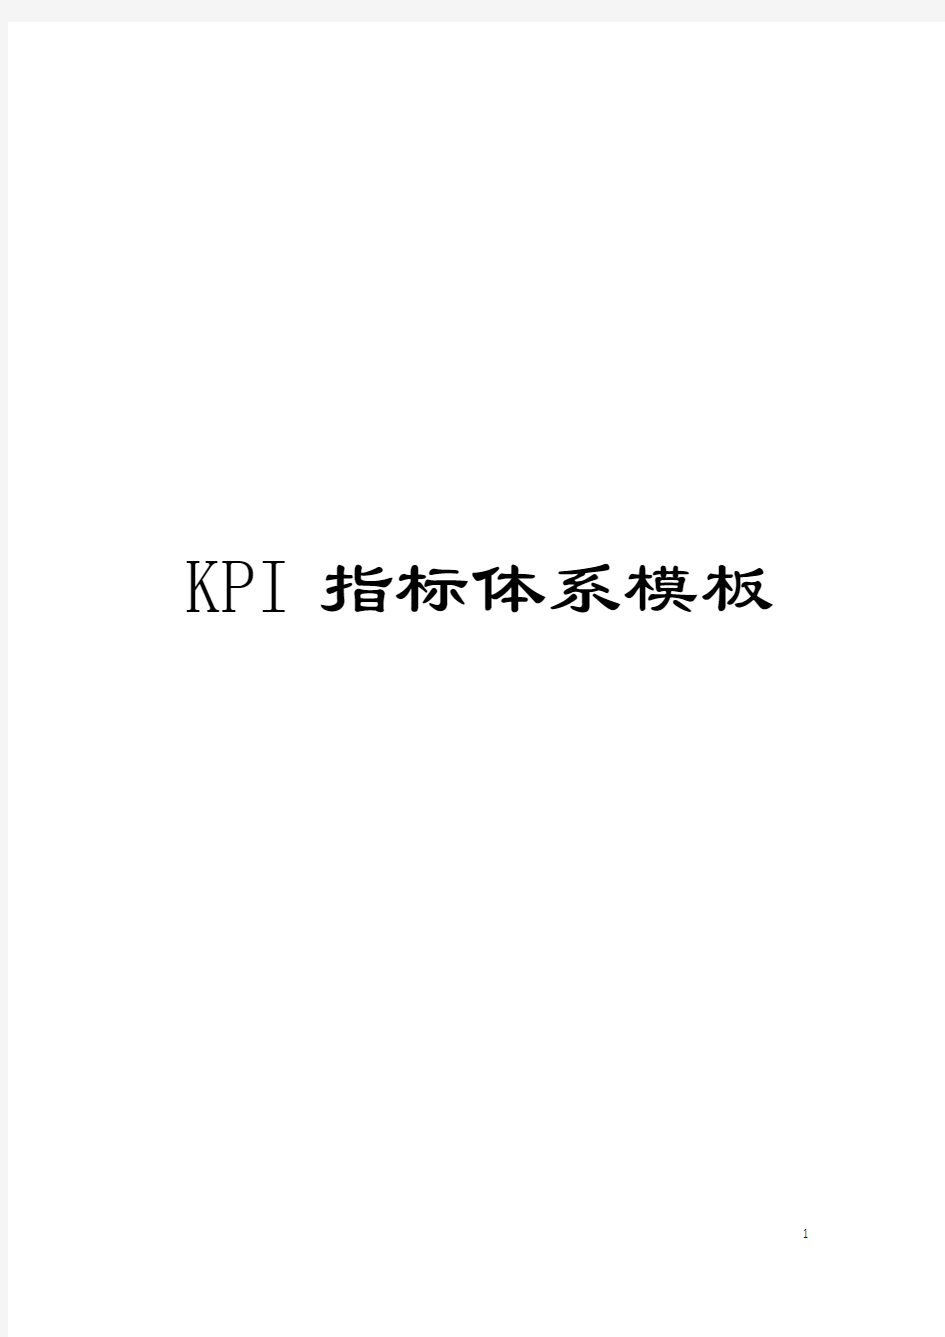 KPI指标体系样本